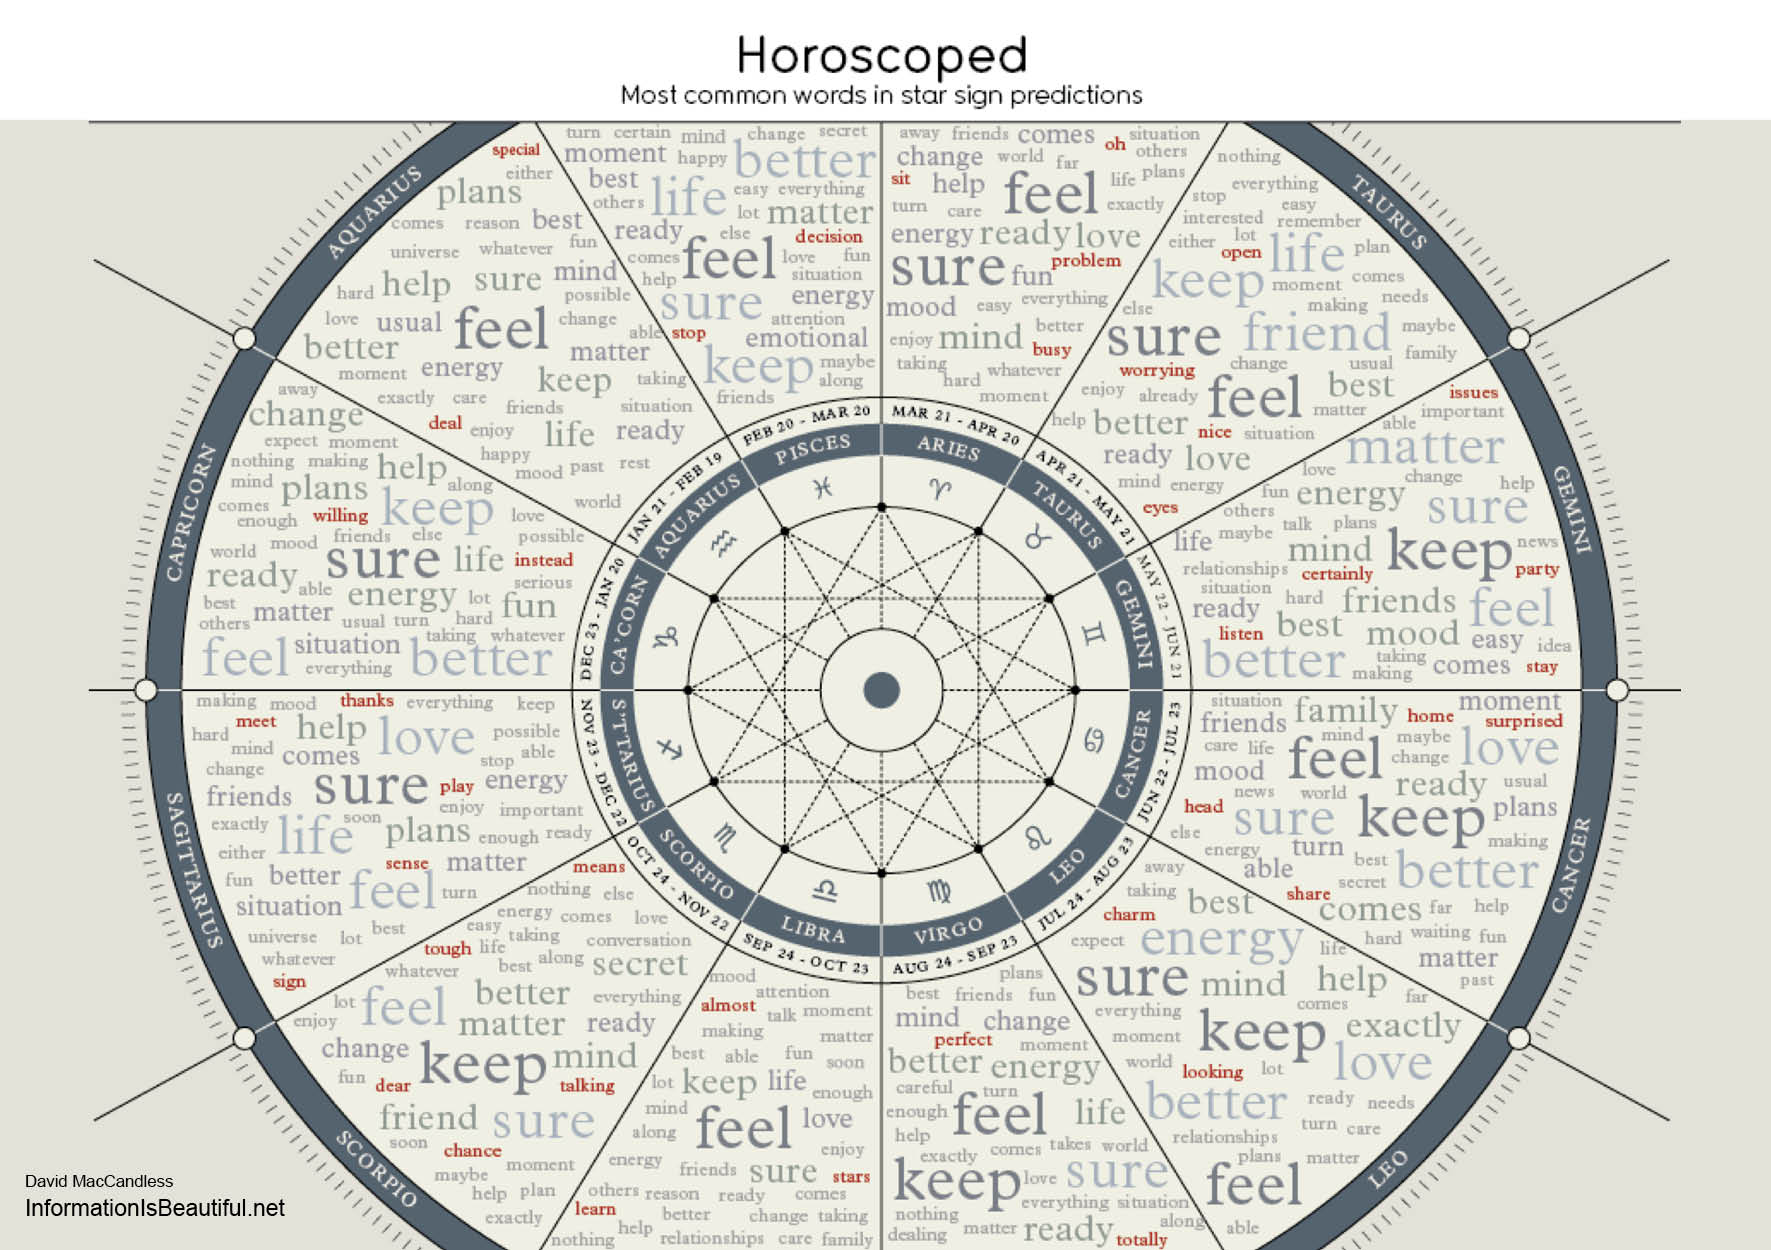 https://www.informationisbeautiful.net/visualizations/horoscoped